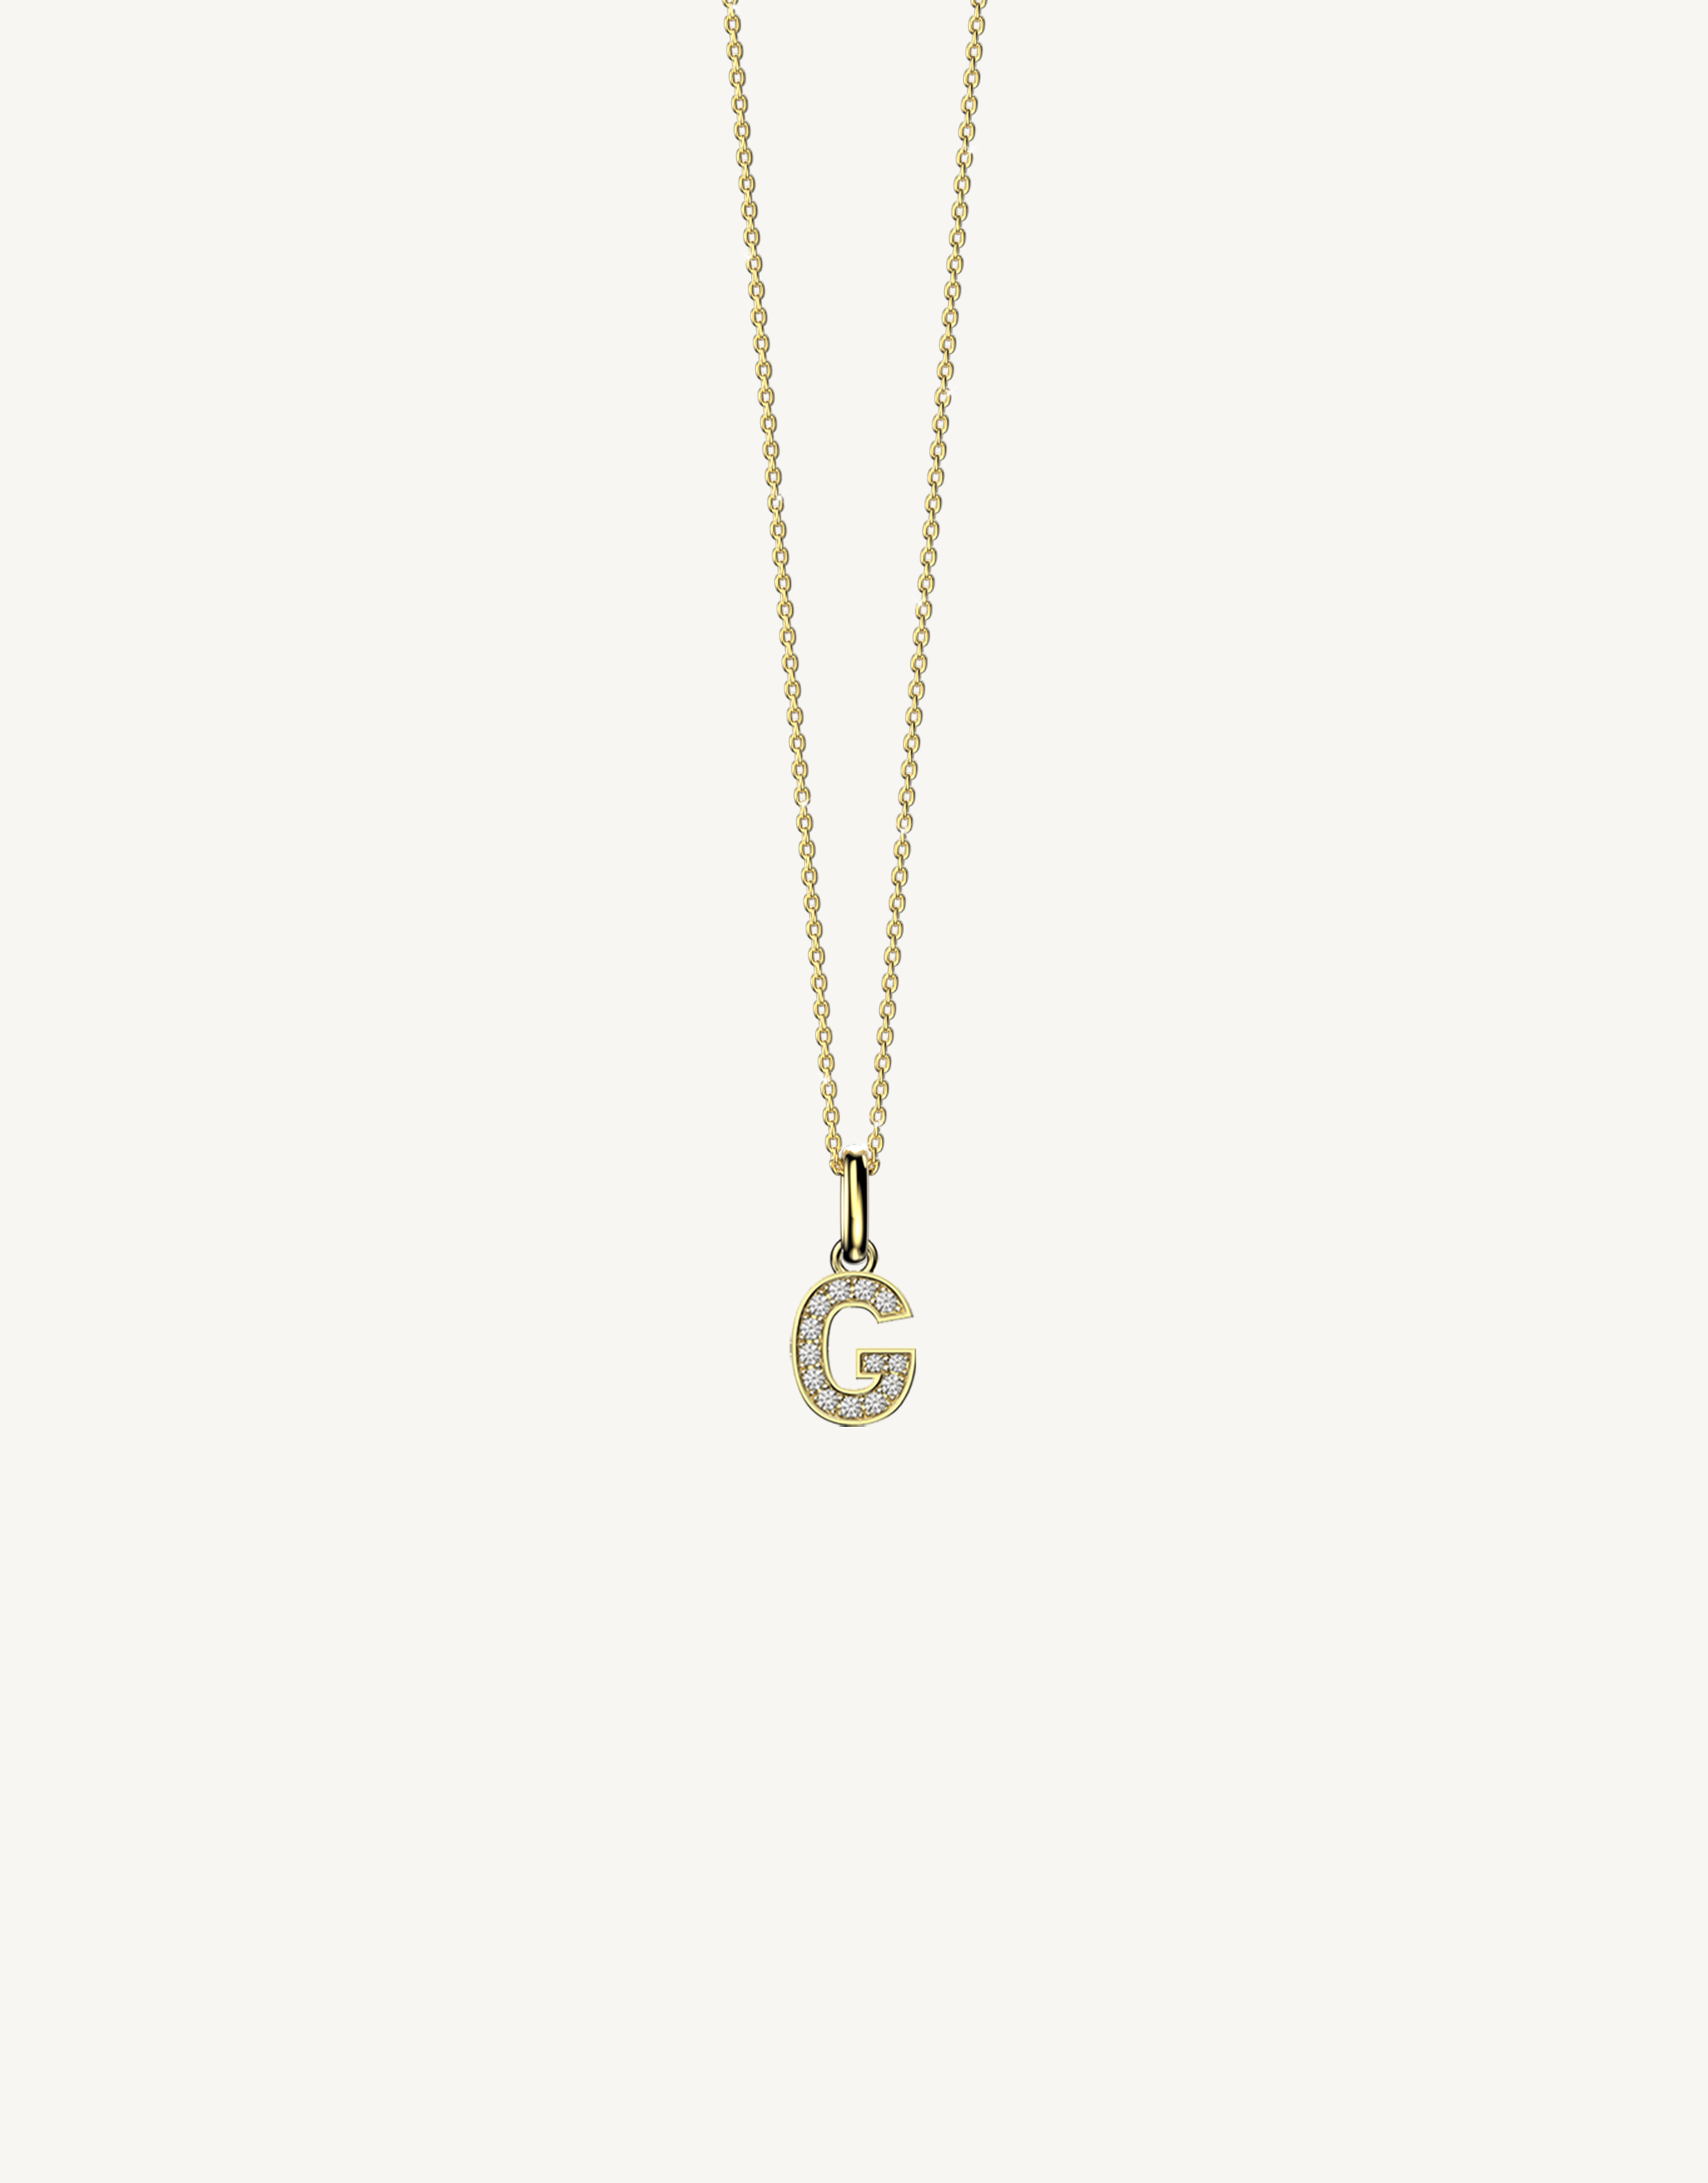 18k yellow gold diamond initial pendant. Luxury custom design. Initial G.